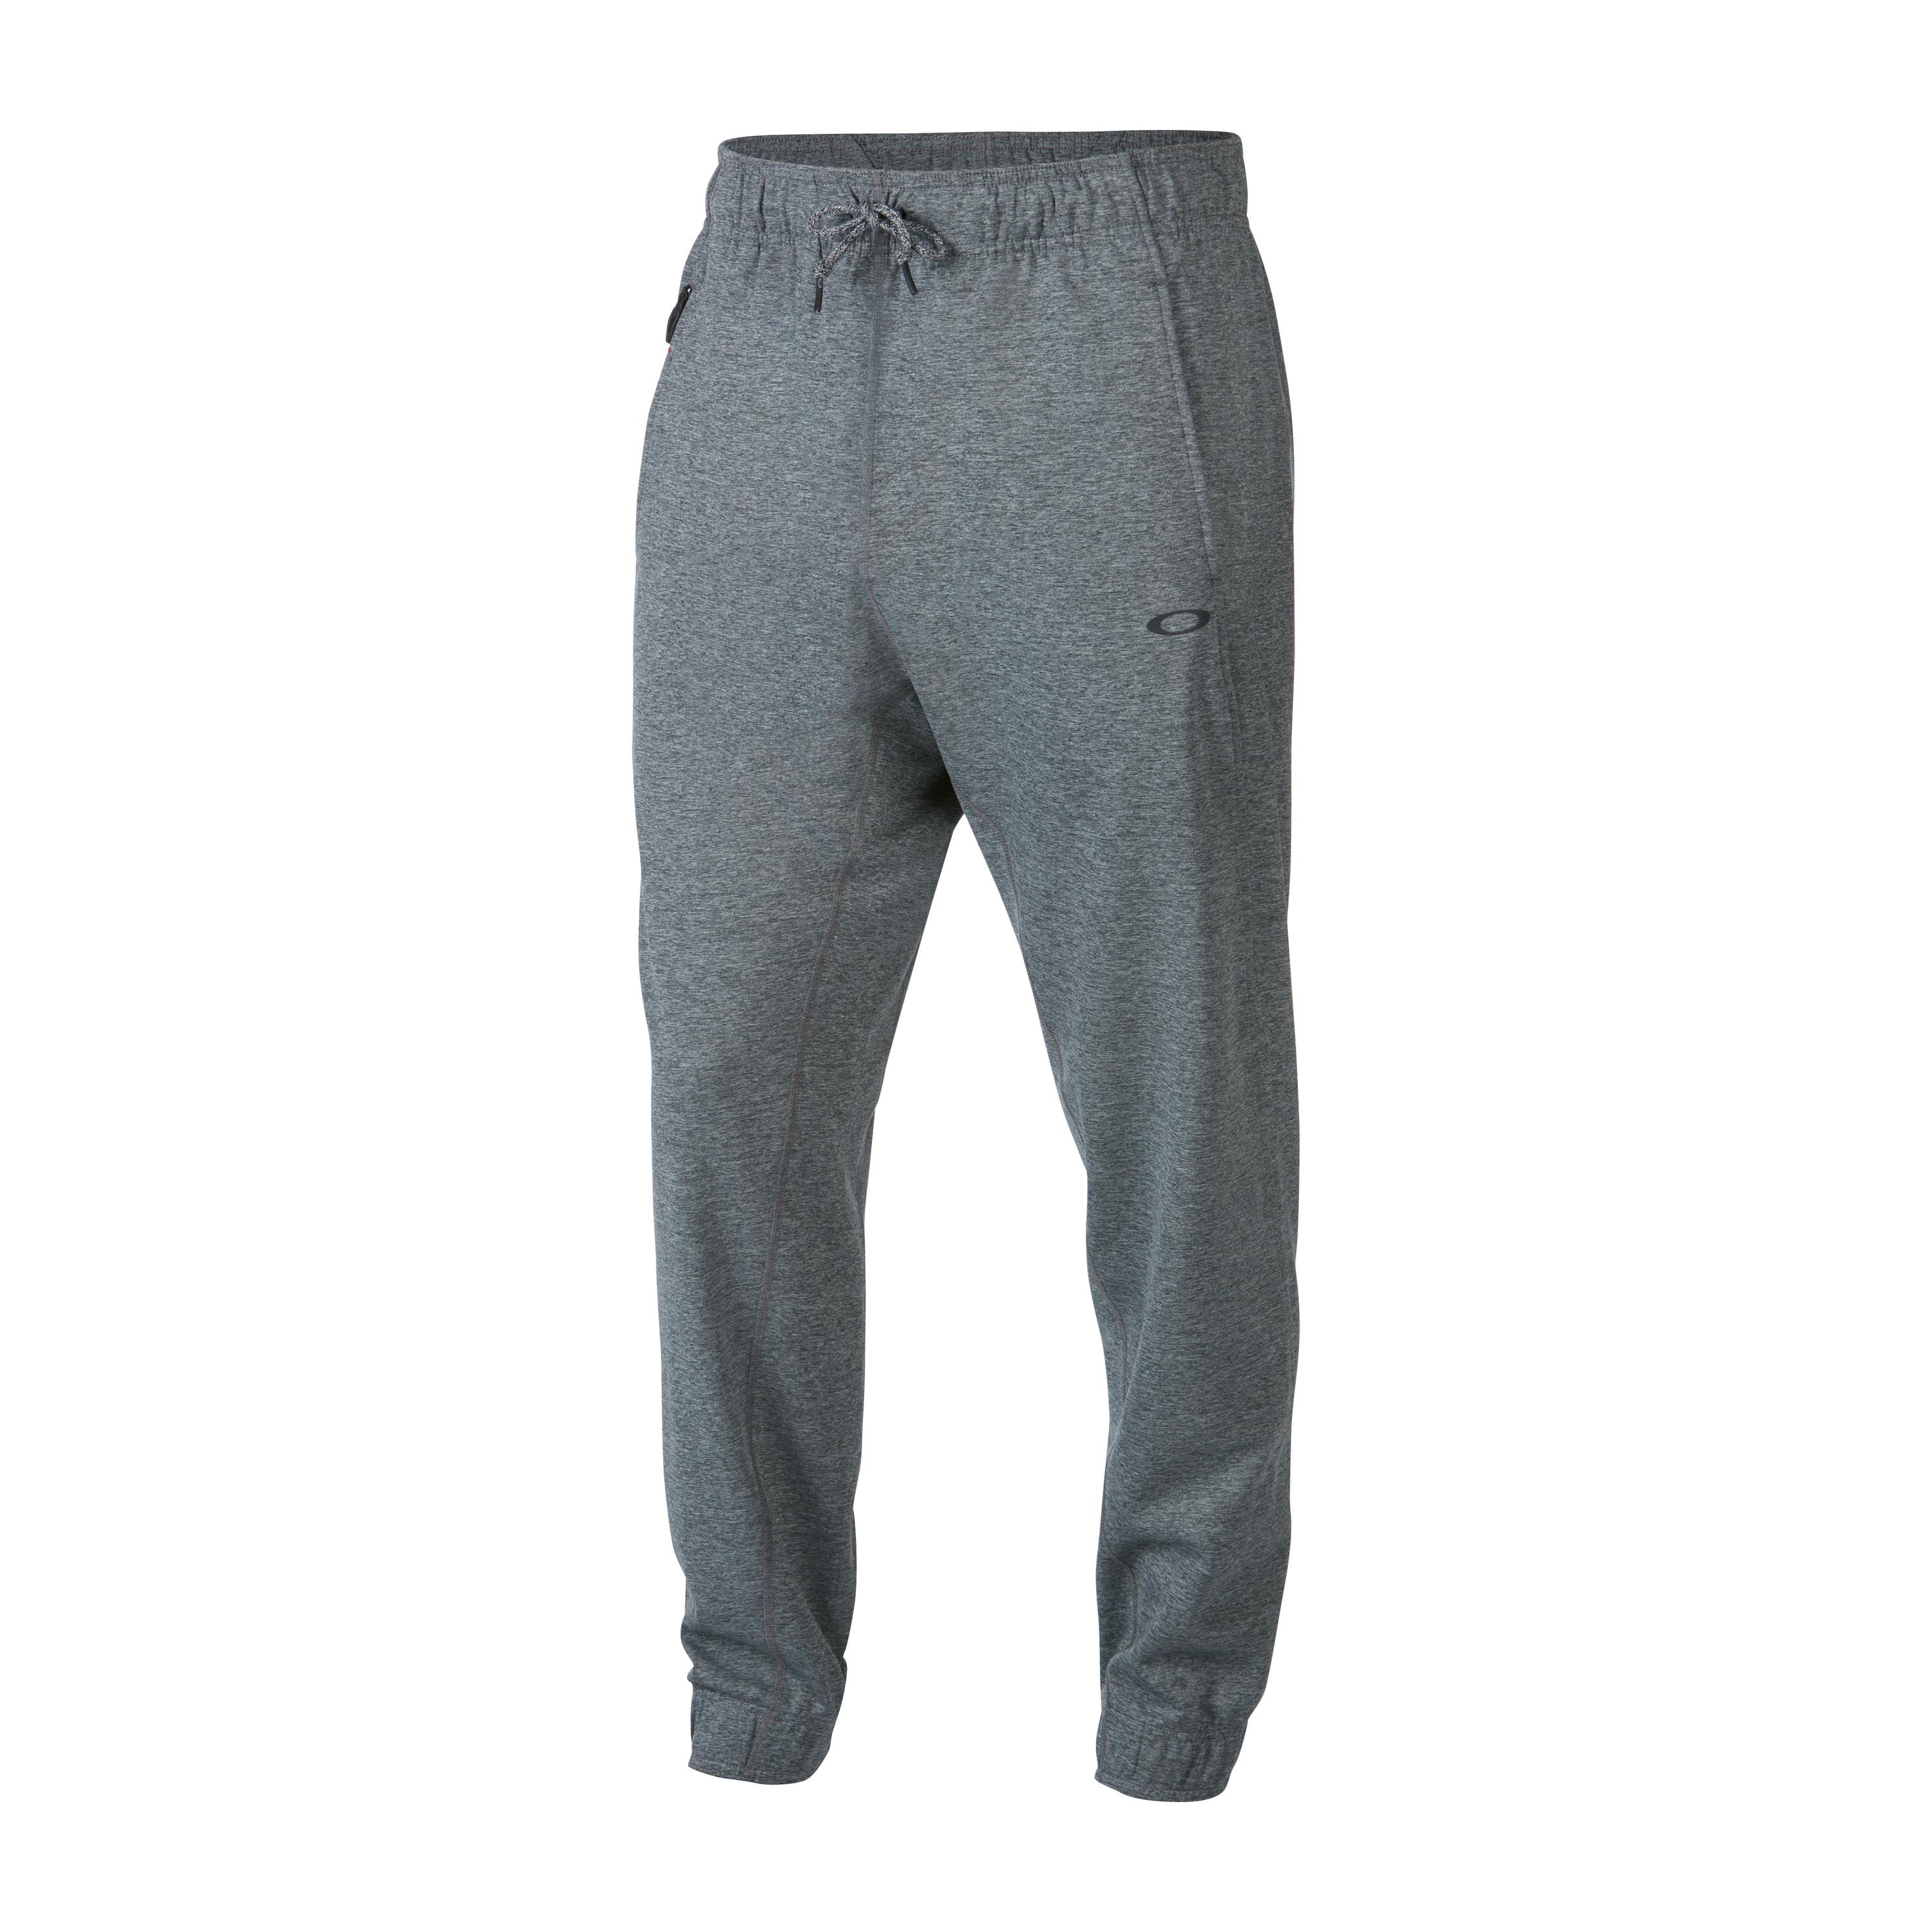 Oakley Focus Fleece Pant in Gray for Men - Lyst